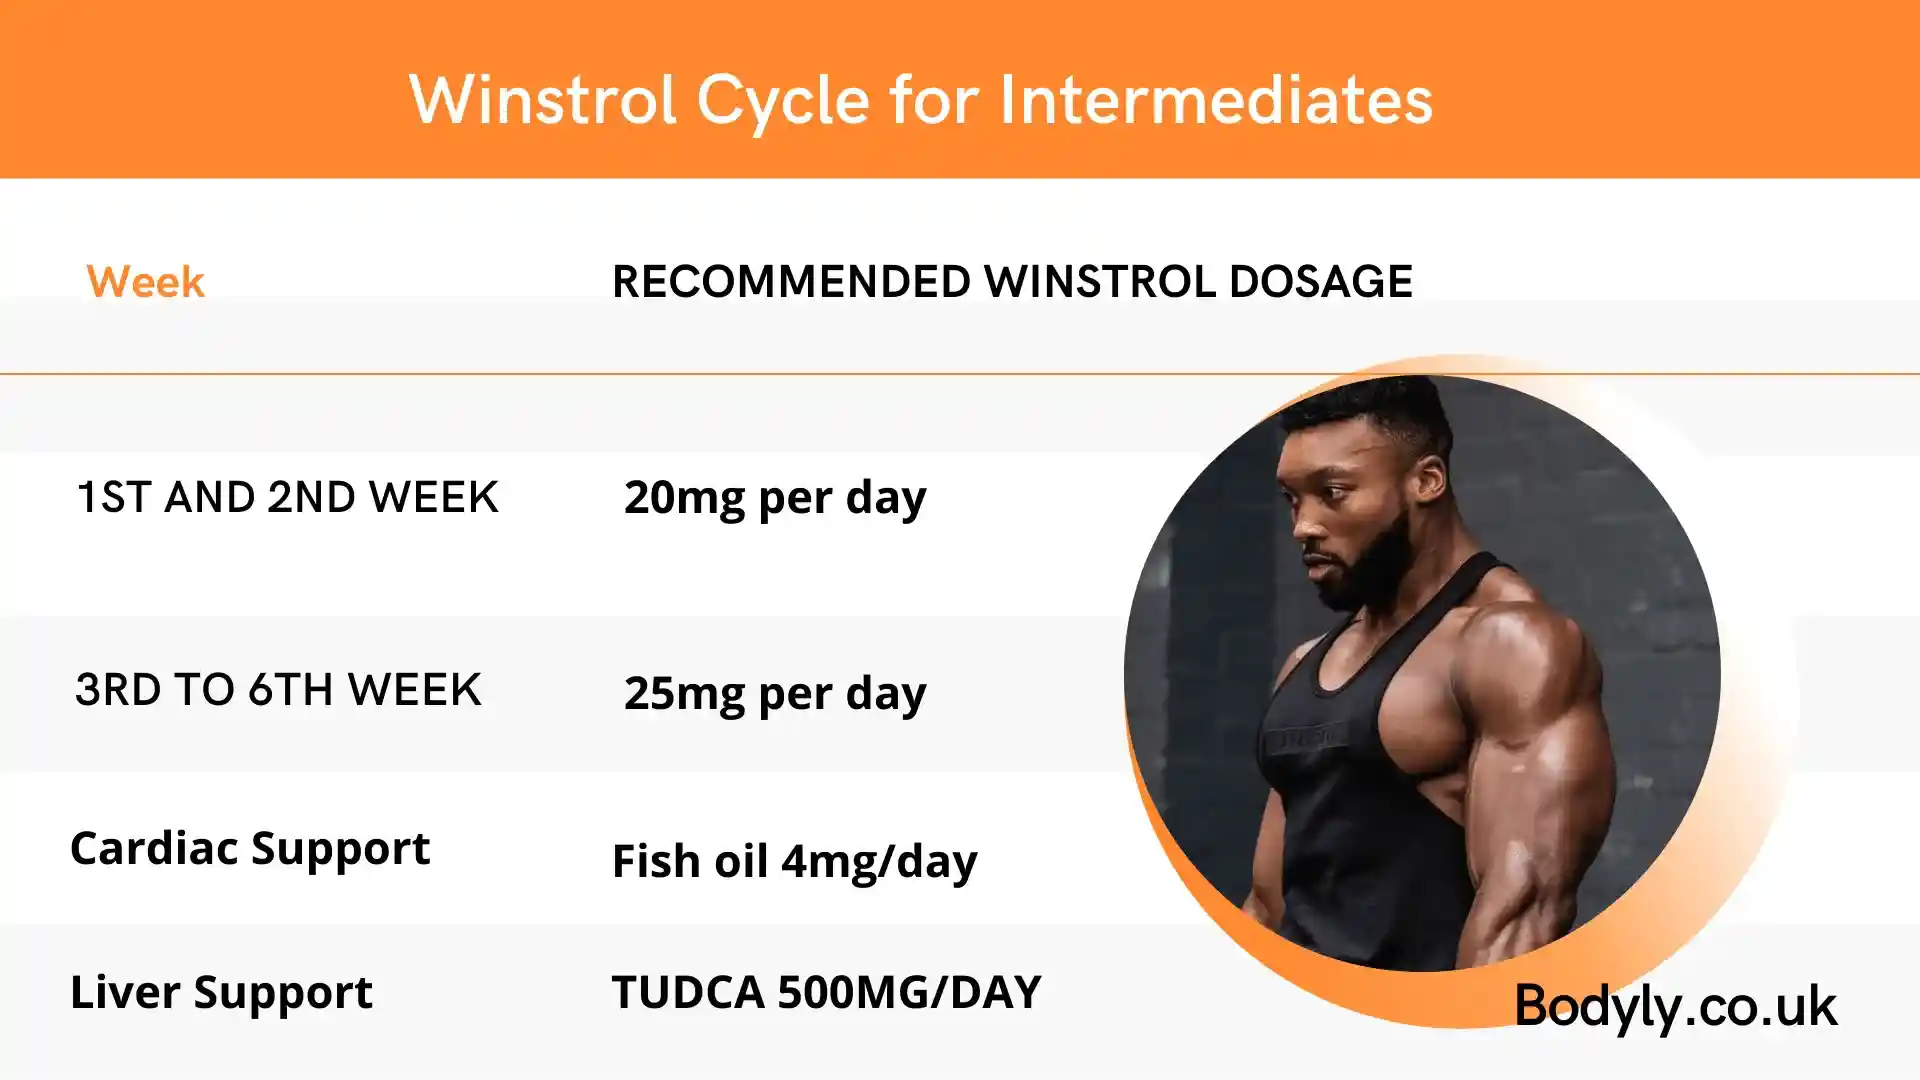 Winstrol cycle for intermediates